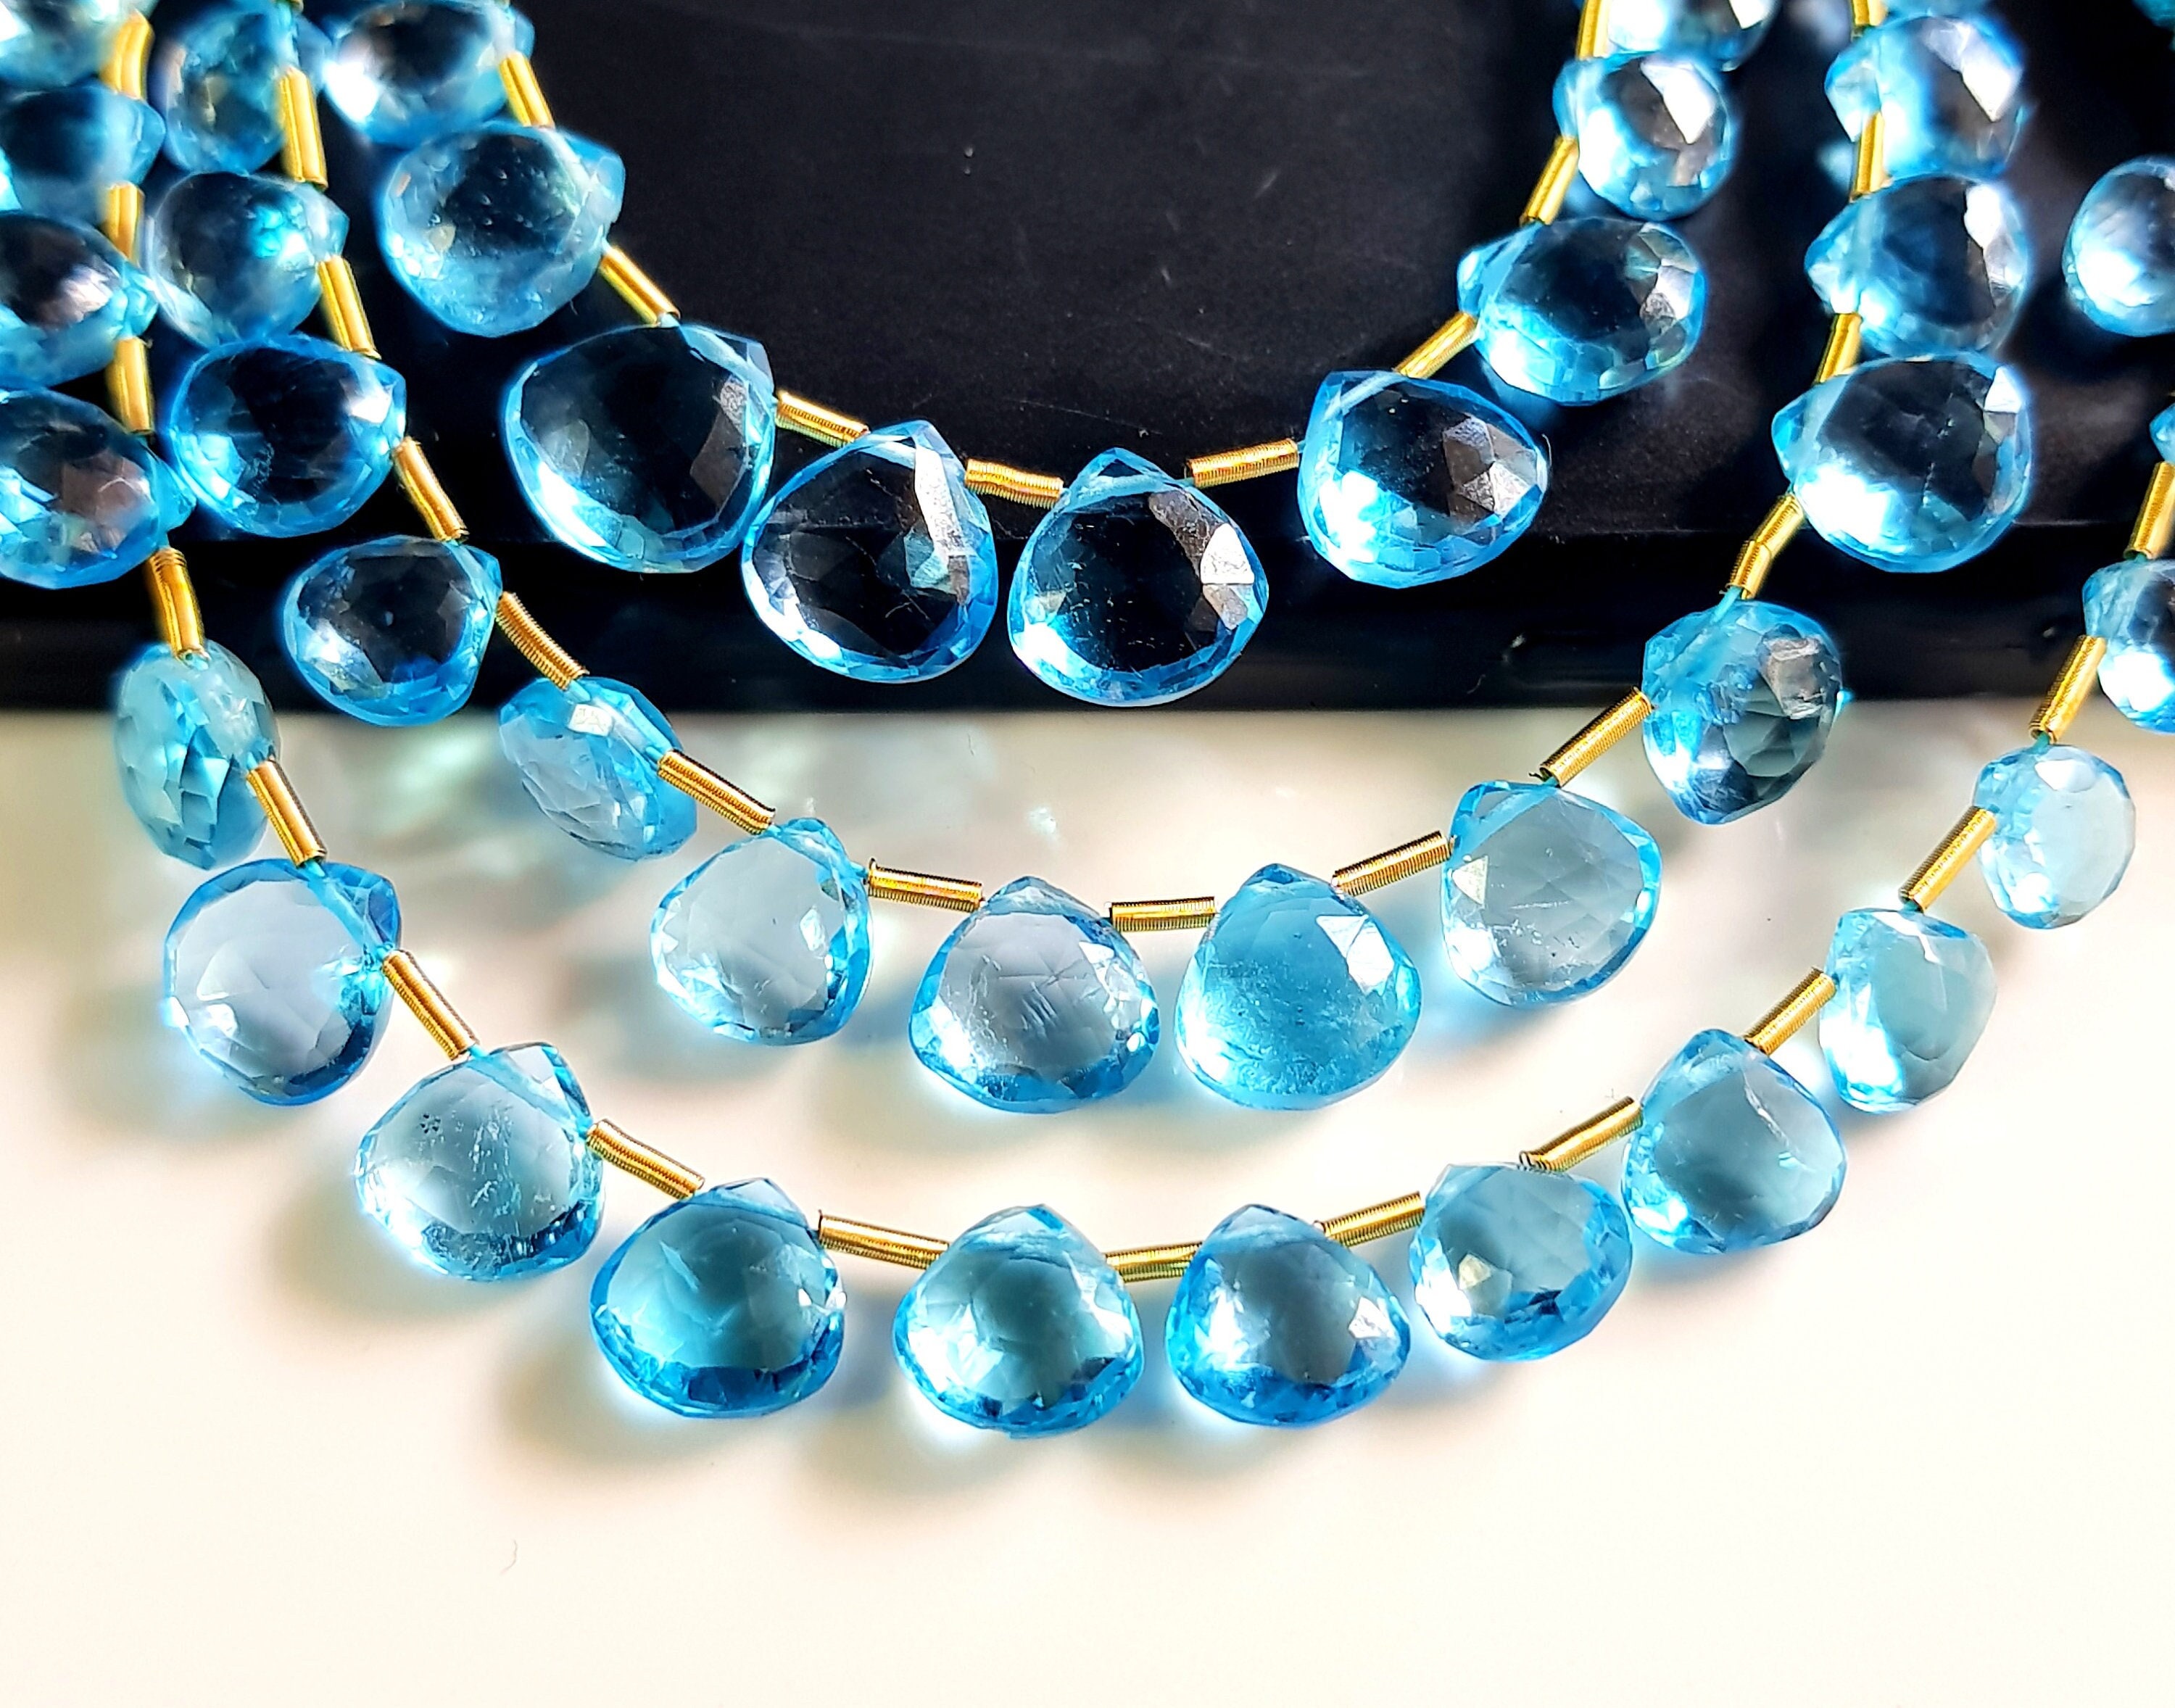 Blue Millefiori Puffy Heart Beads – Estate Beads & Jewelry